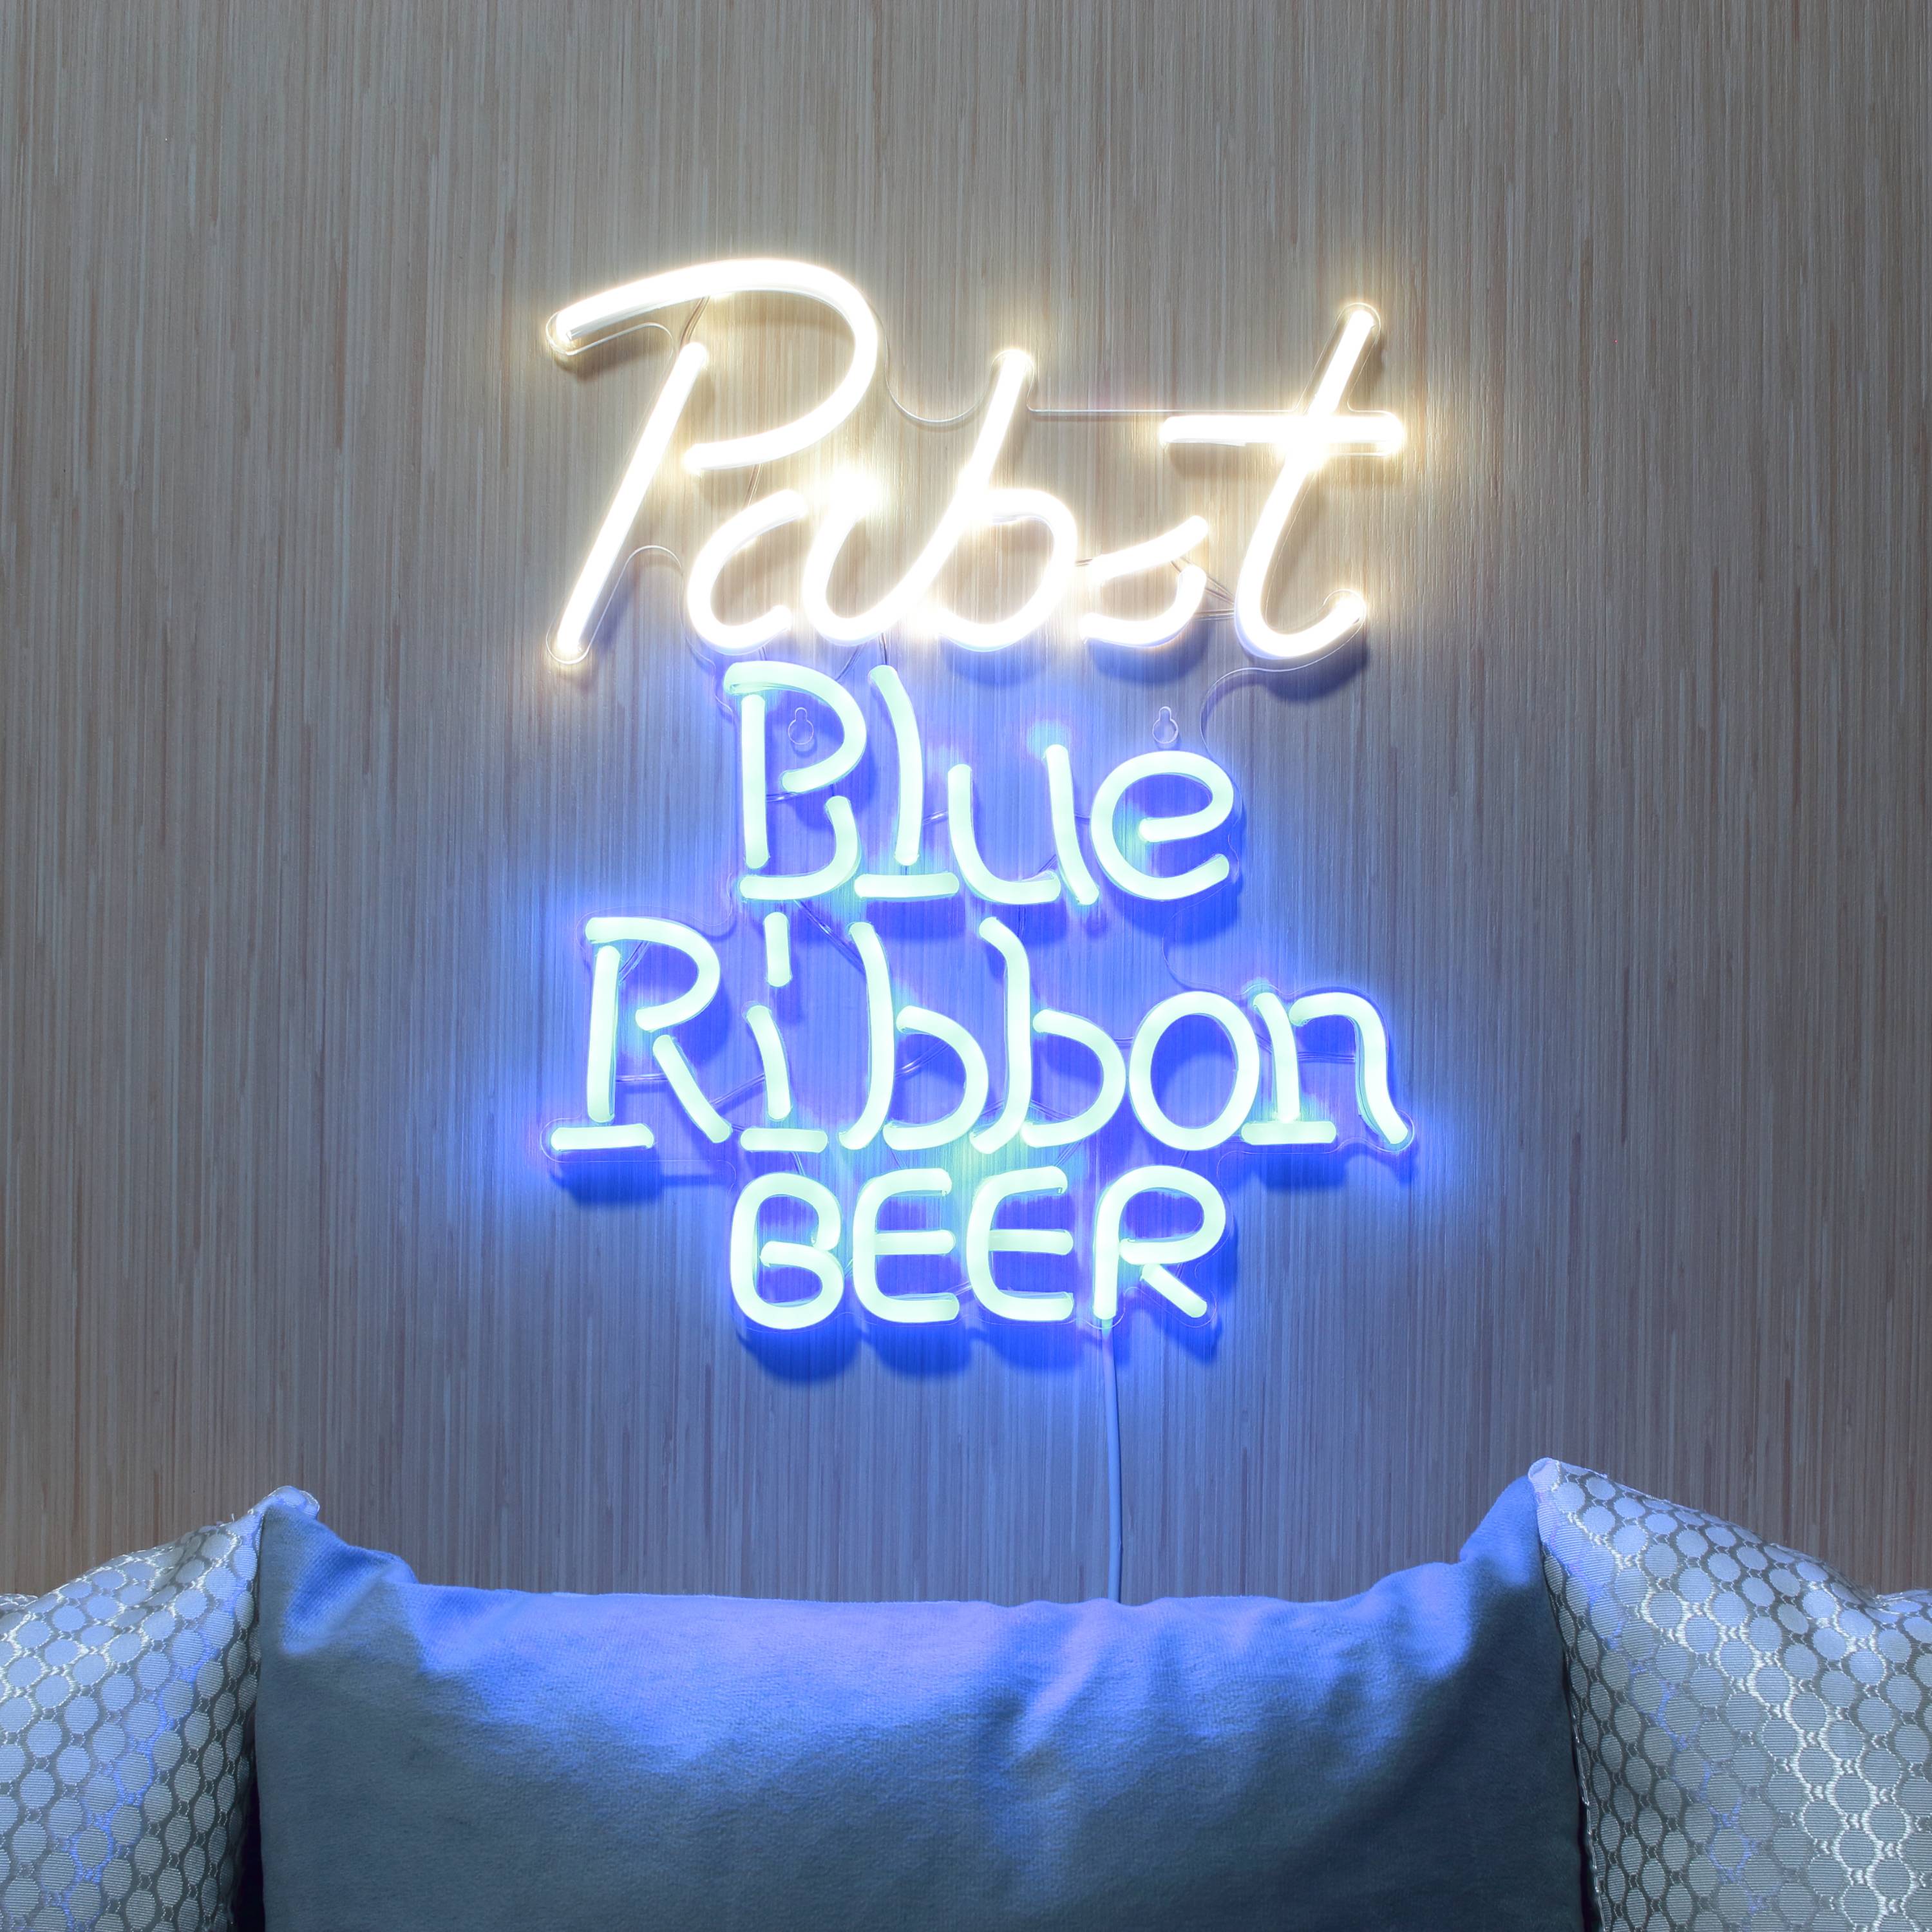 Pabst Blue Ribbon Beer Large Flex Neon LED Sign